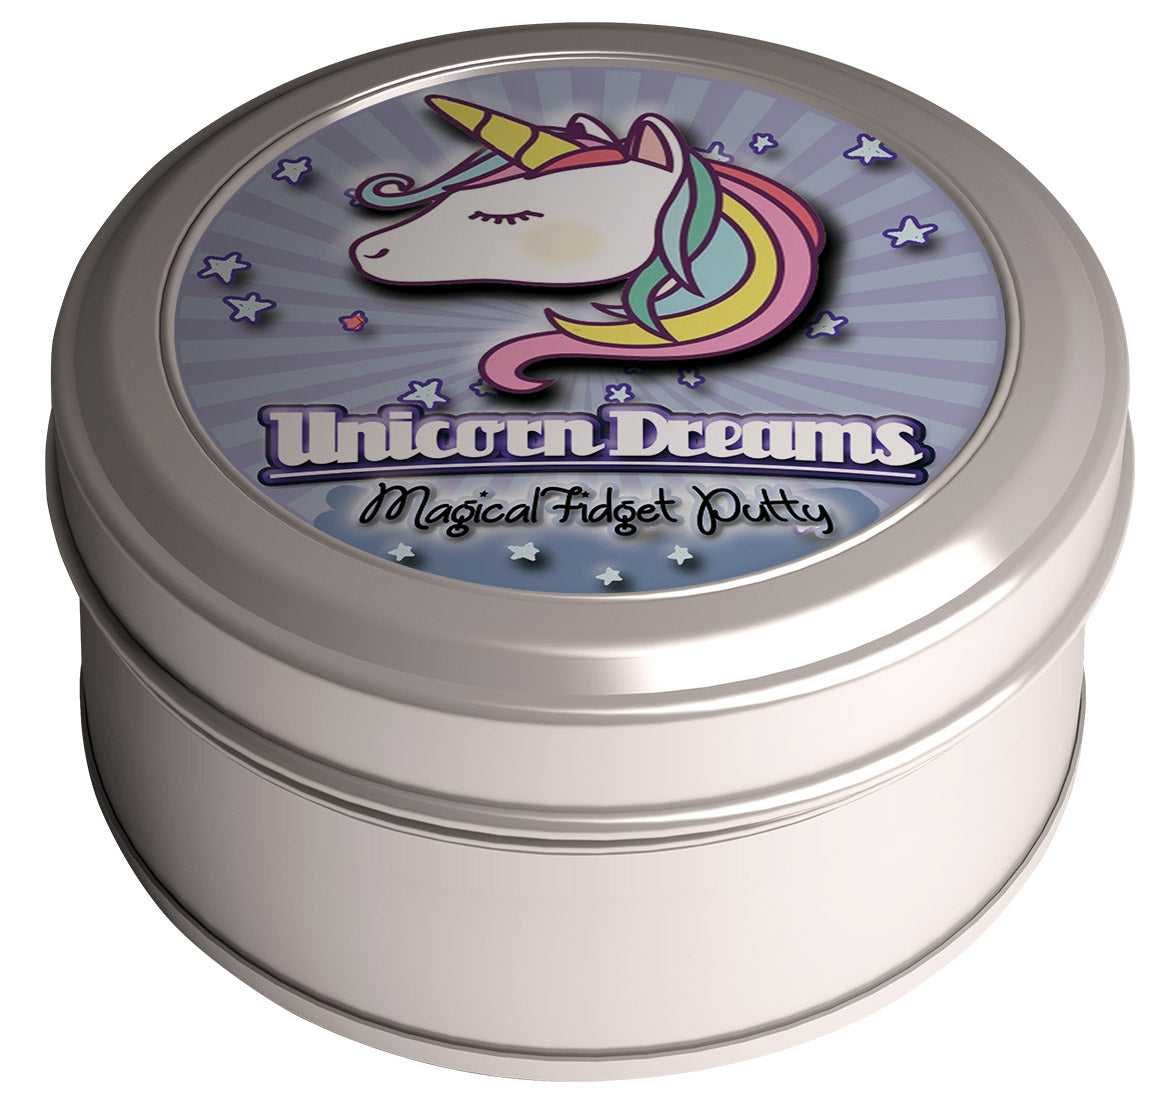 Unicorn Dreams Magical Fidget Putty